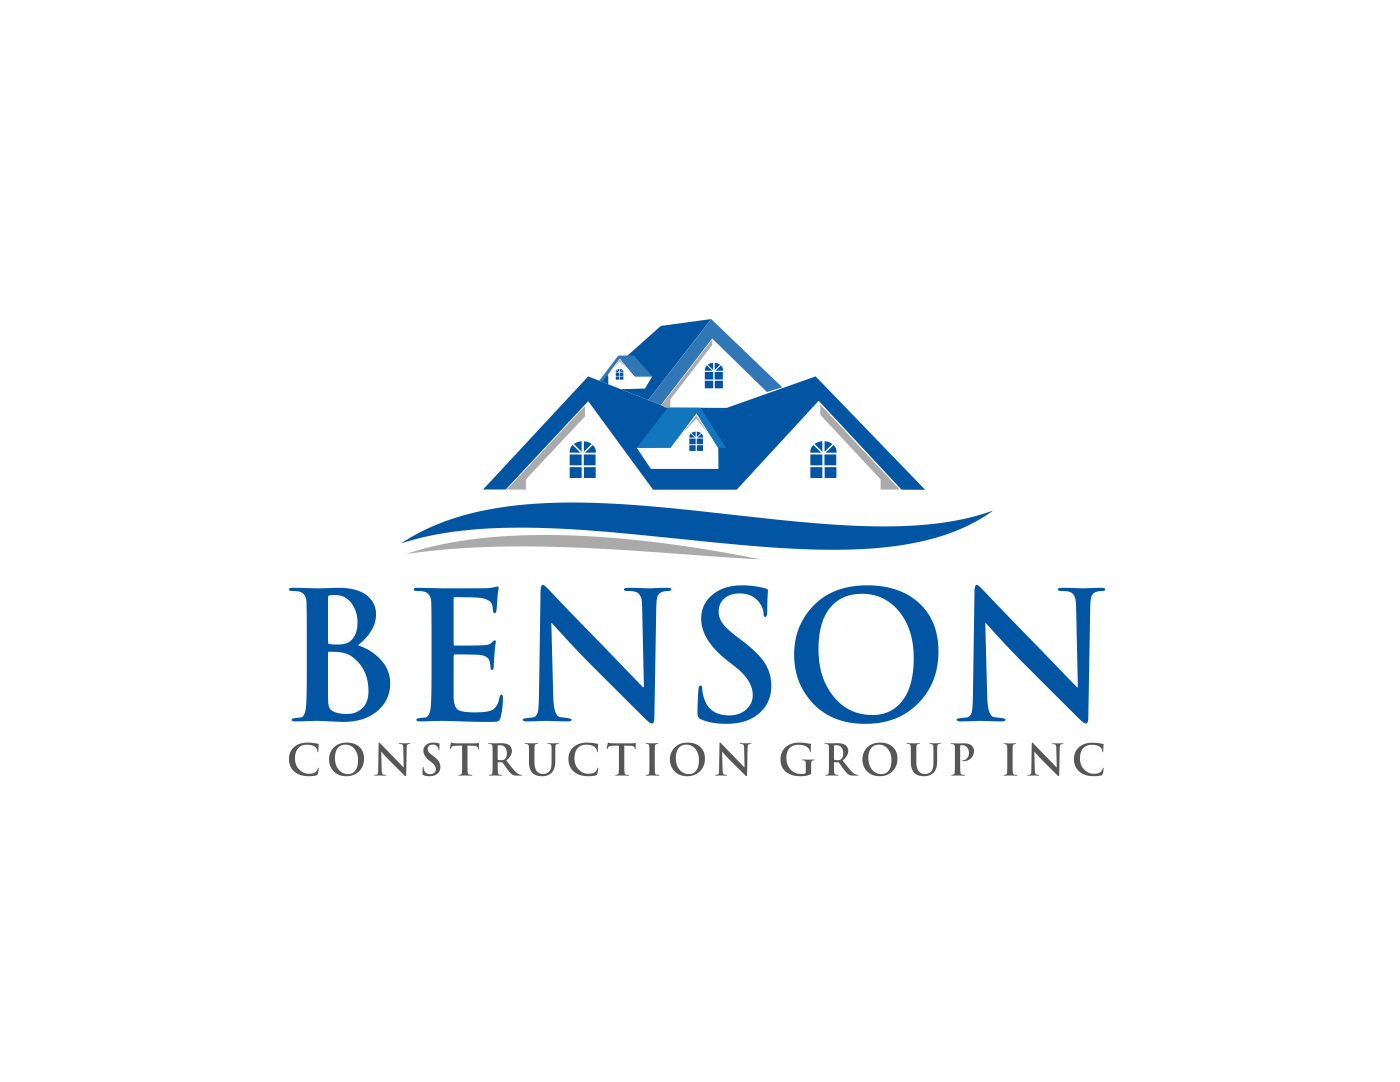 Benson Logo - Professional, Upmarket, Construction Company Logo Design for Benson